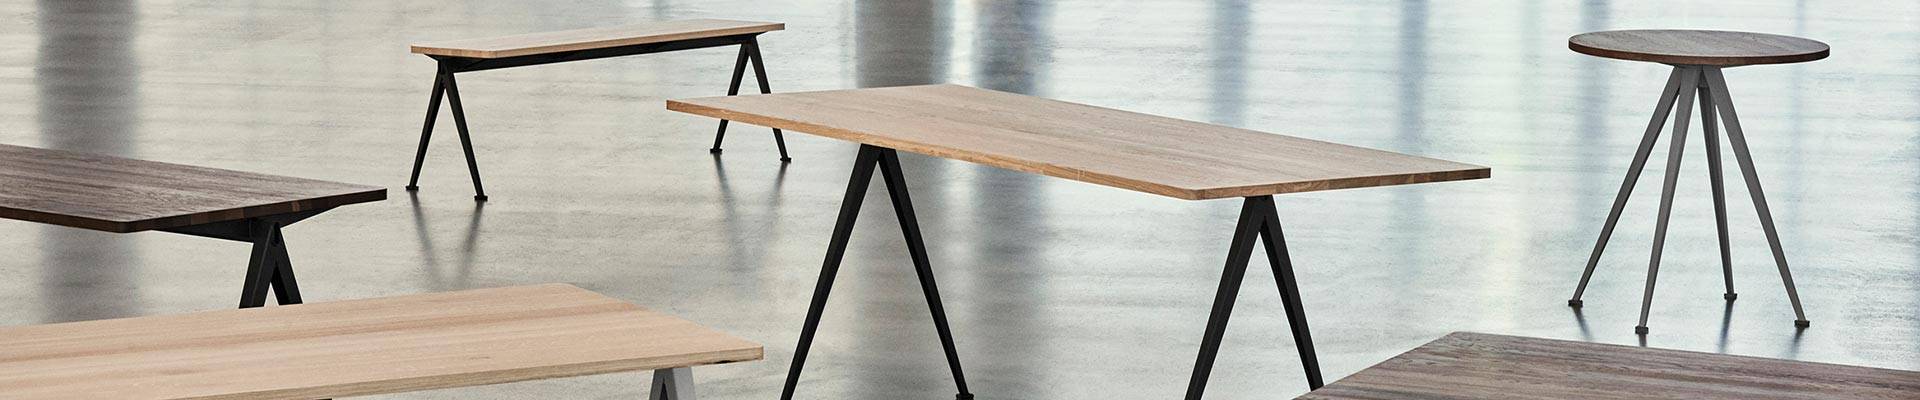 Design tafels | Design tafel kopen? Flinders